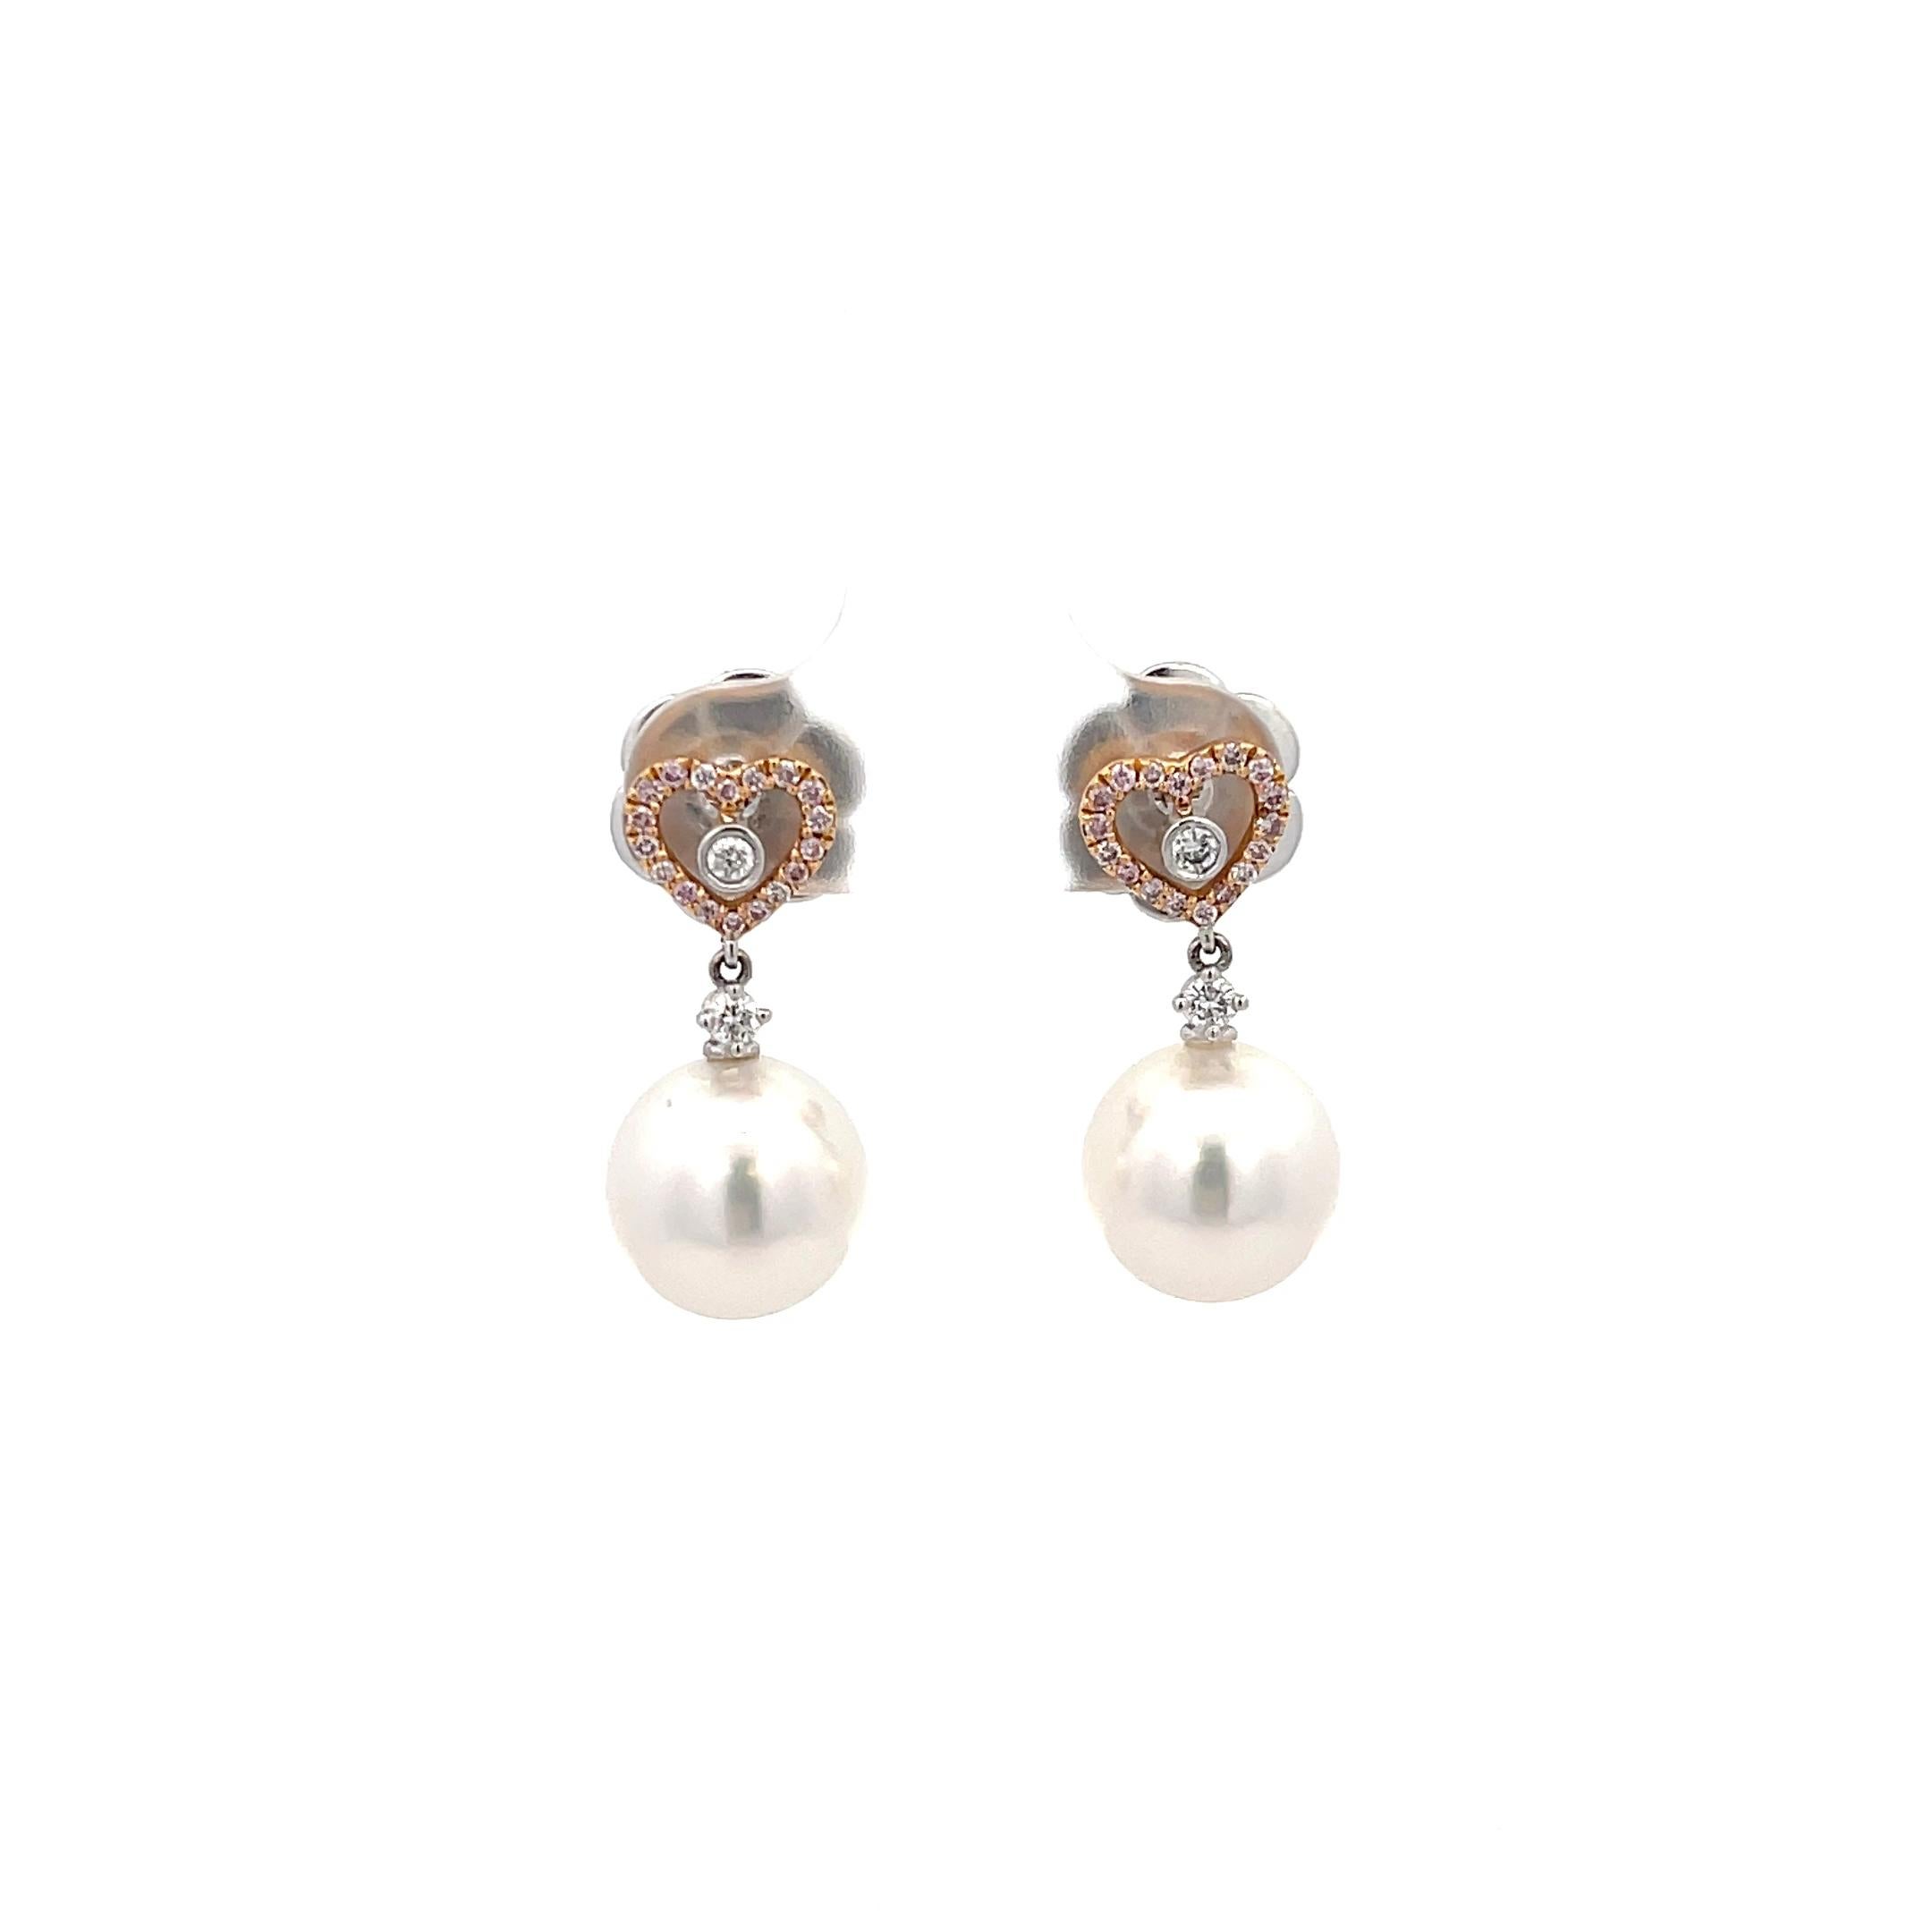 Autore Pearl & Heart Diamond Earrings in 18K Gold. The earrings feature two 10mm south sea pearls.
0.75